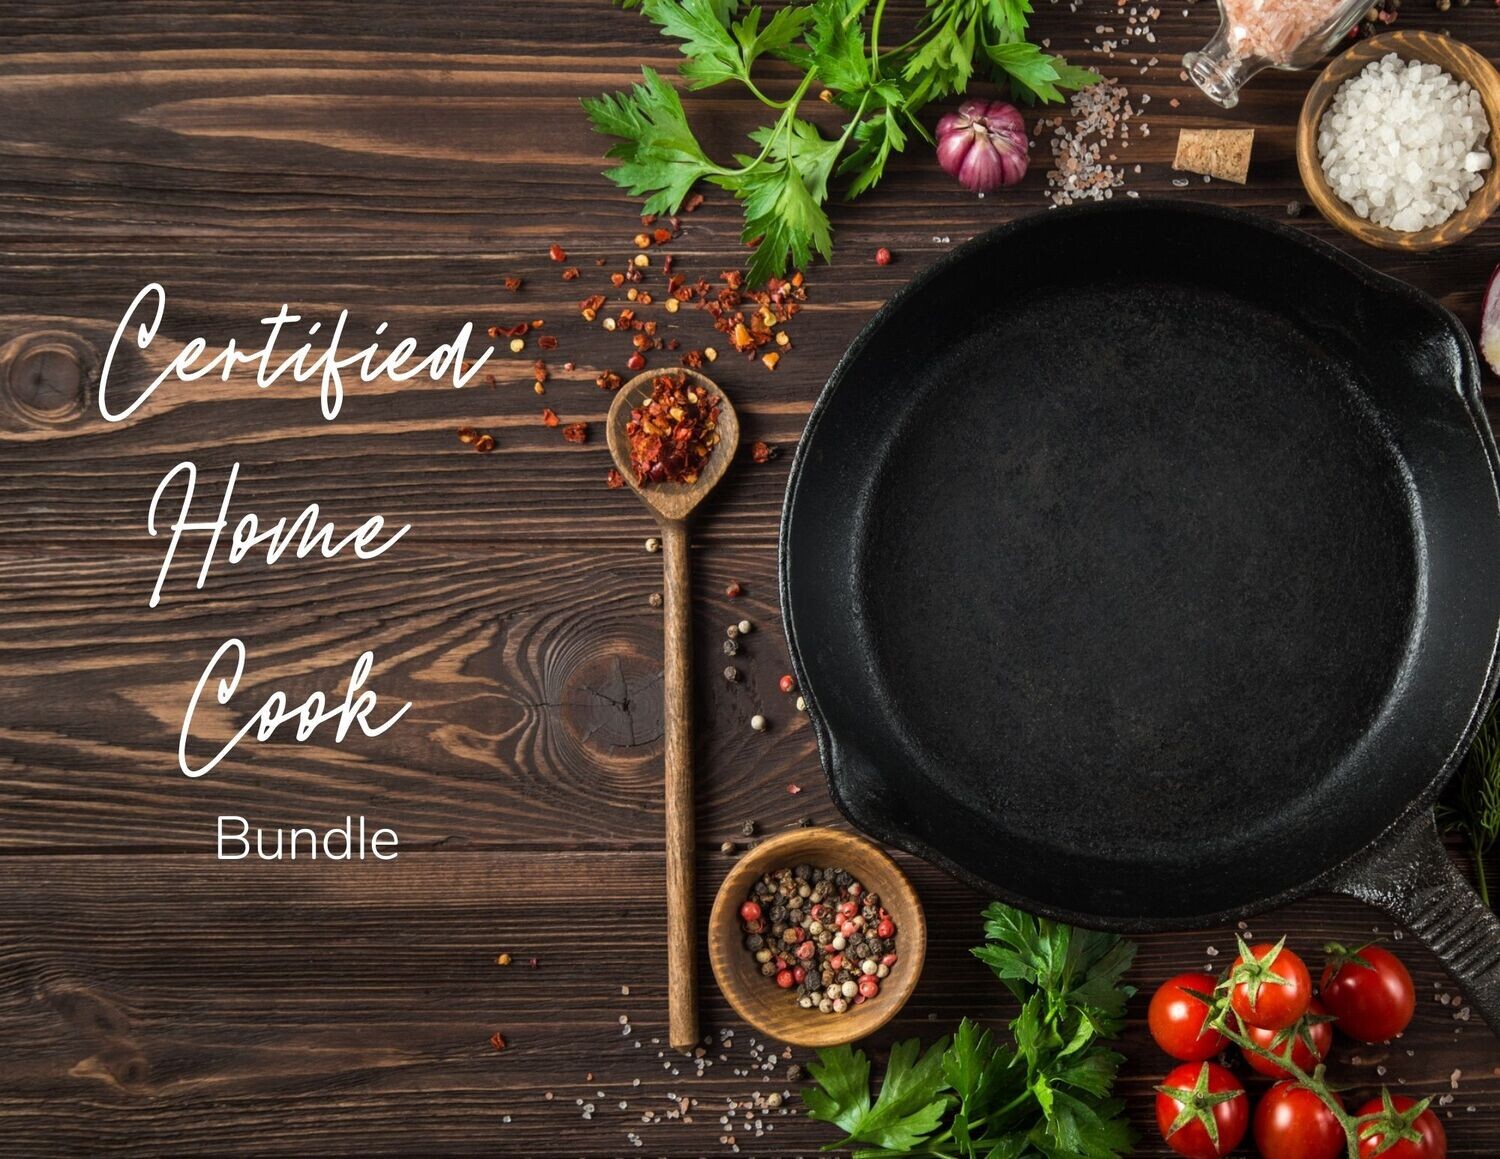 Certified Home Cook Bundle!